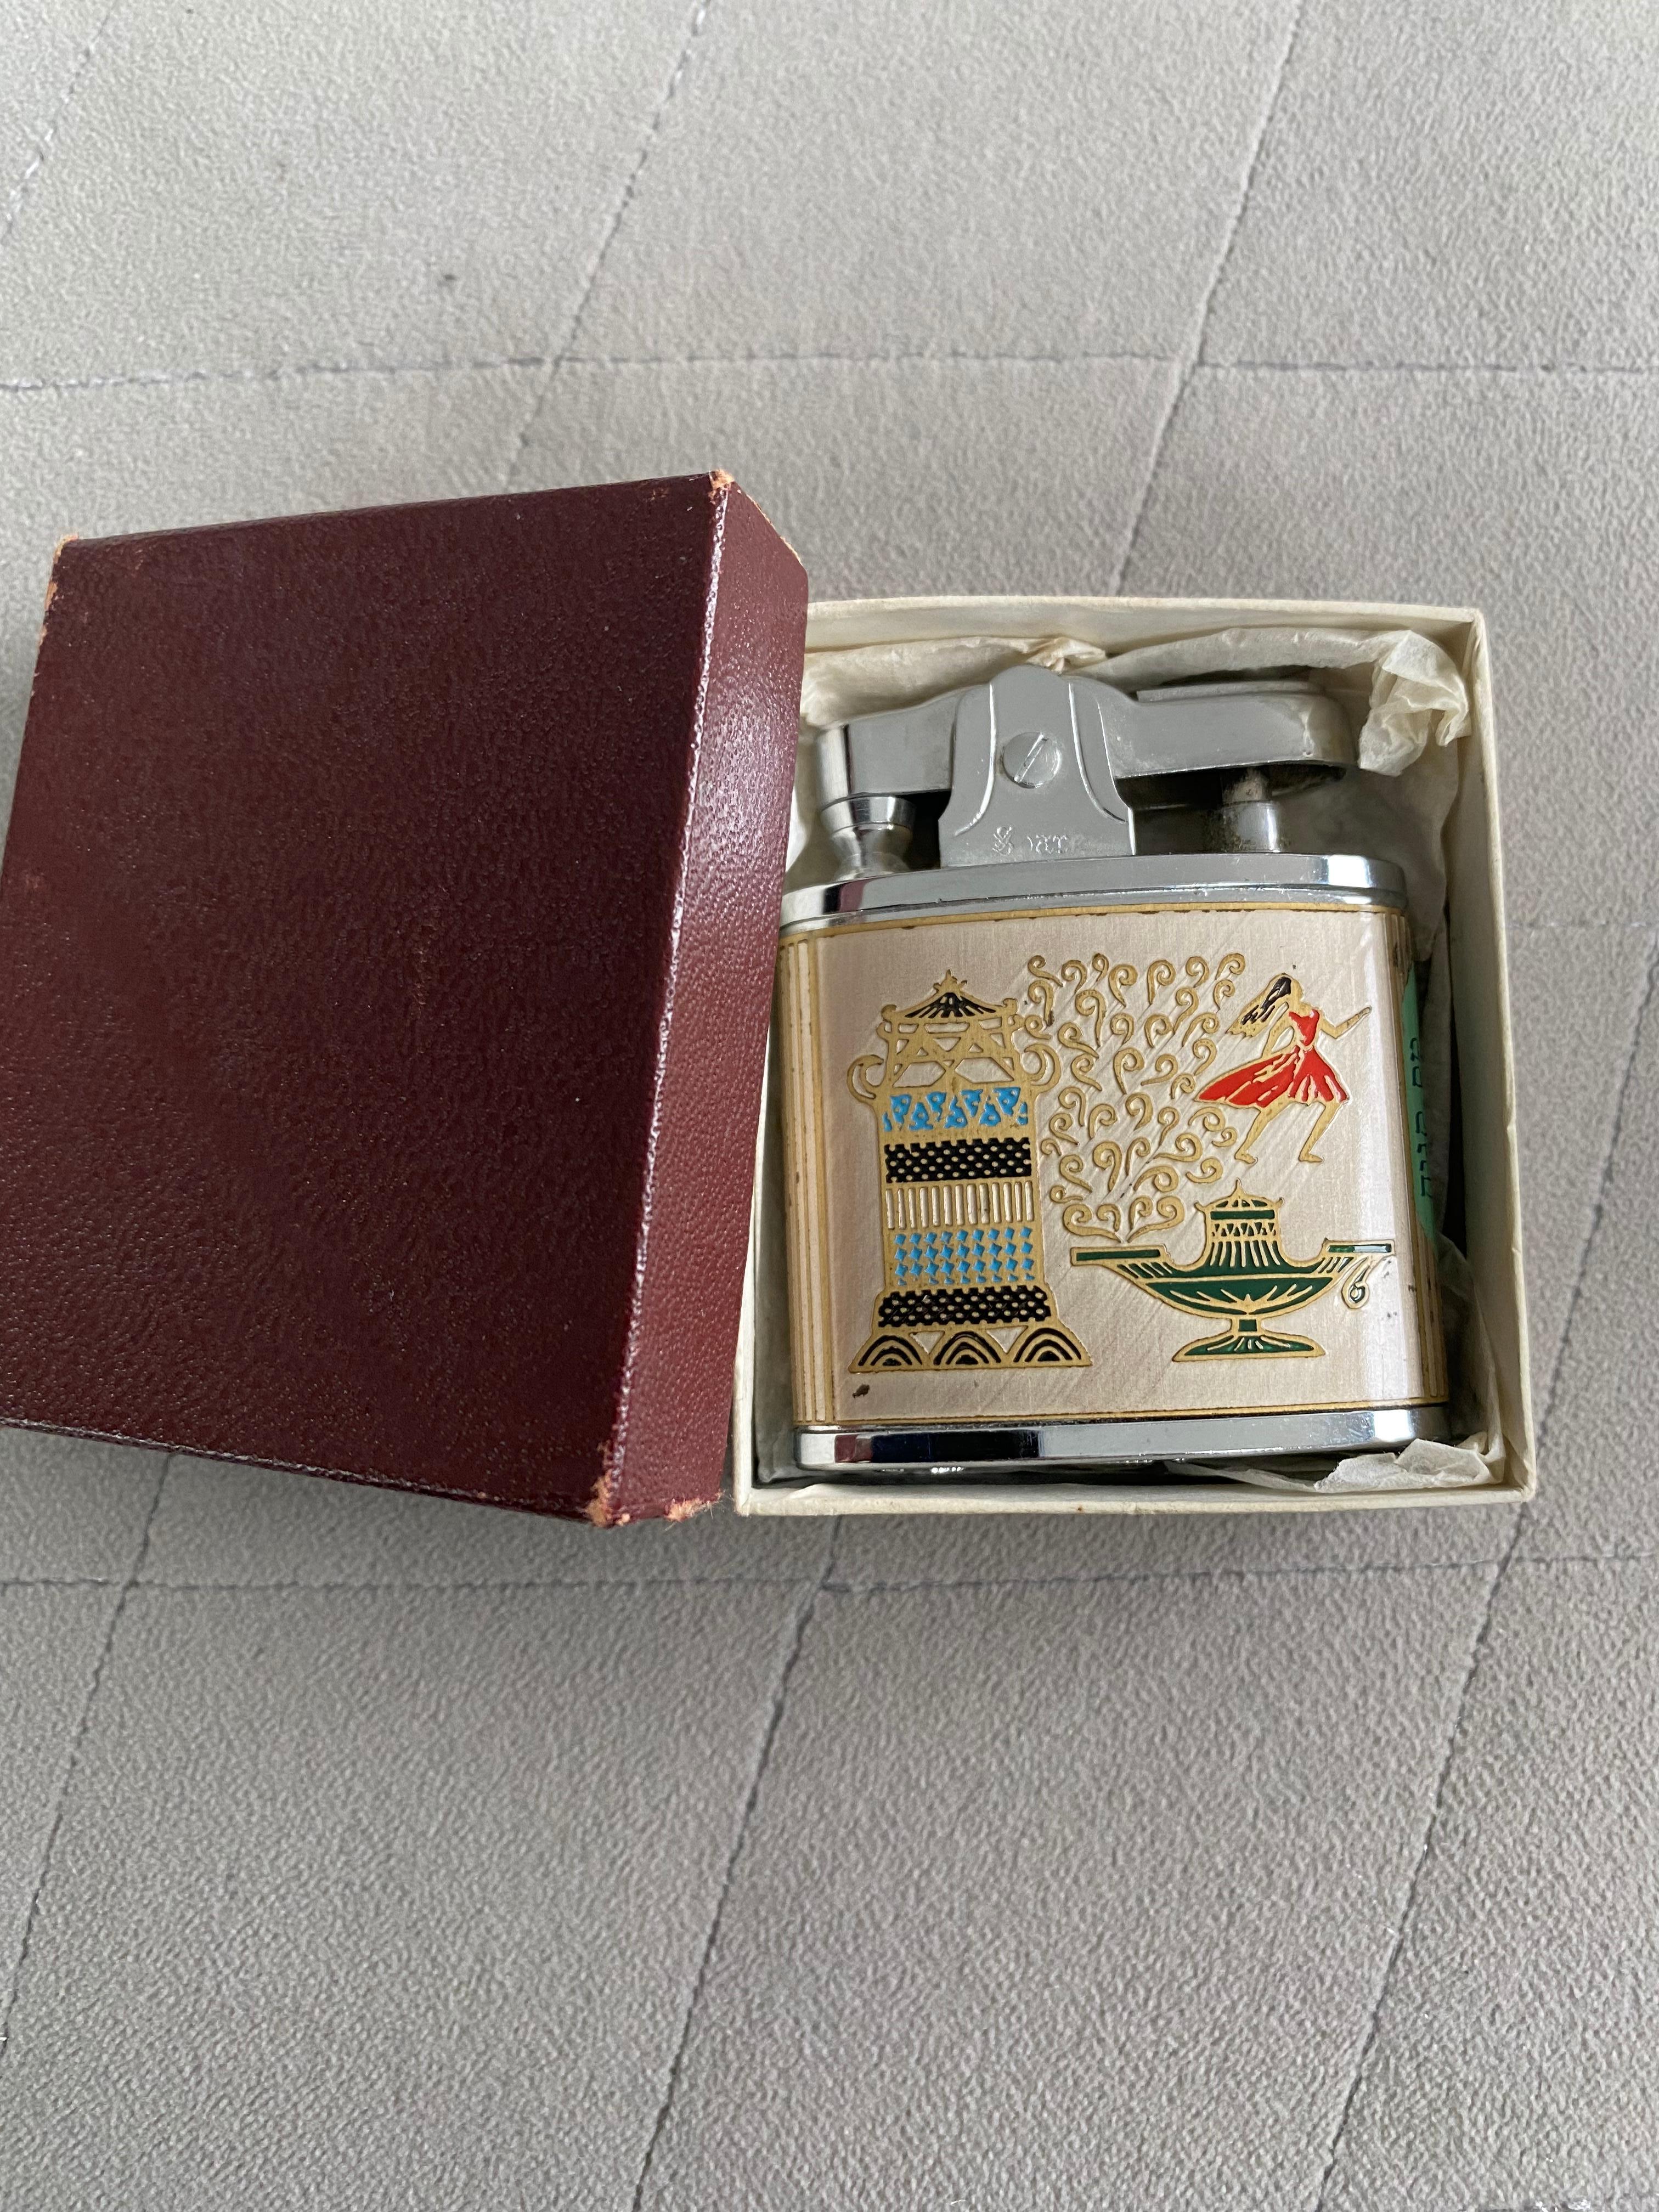 vintage japanese lighters